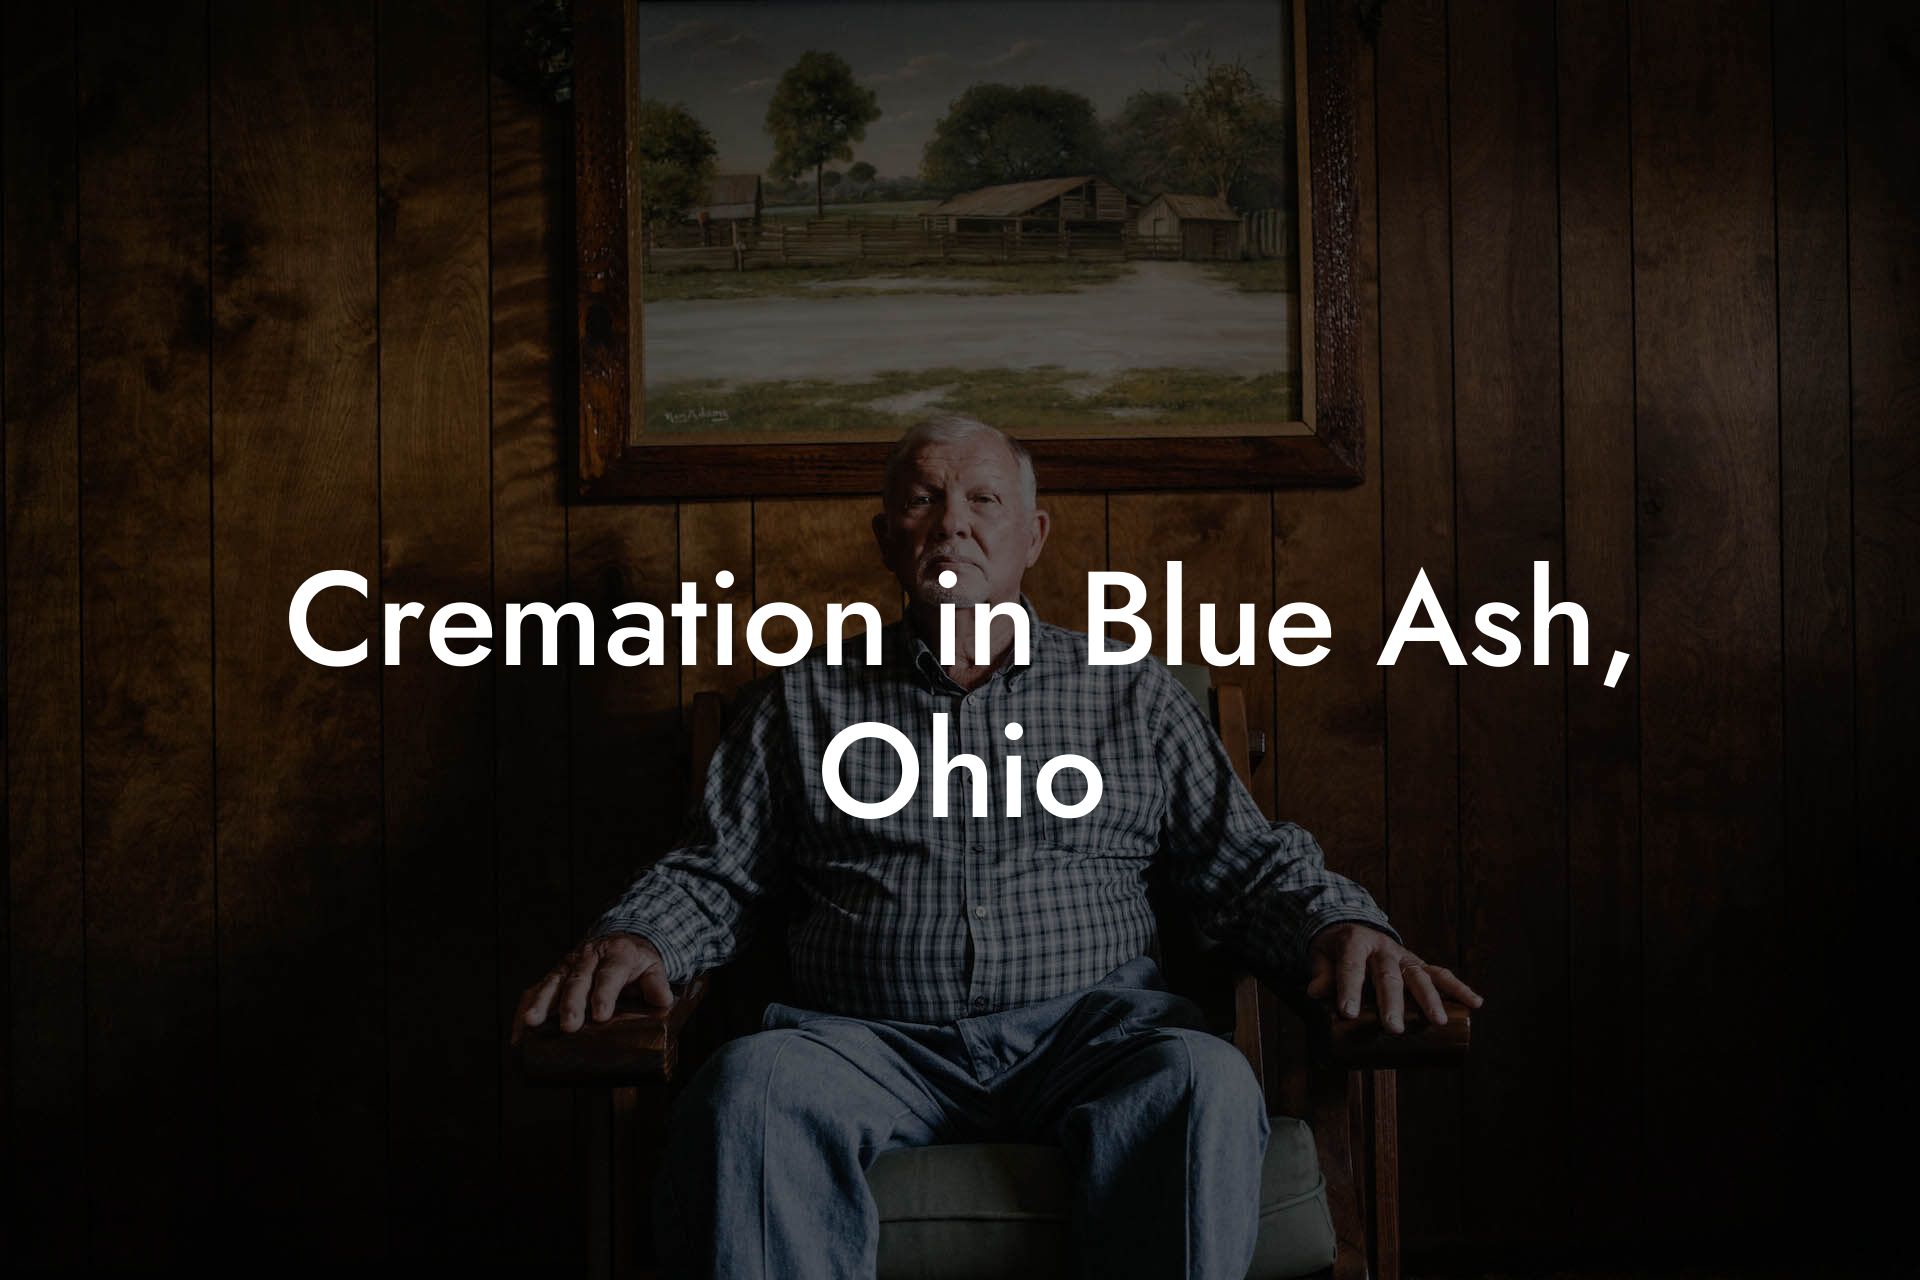 Cremation in Blue Ash, Ohio